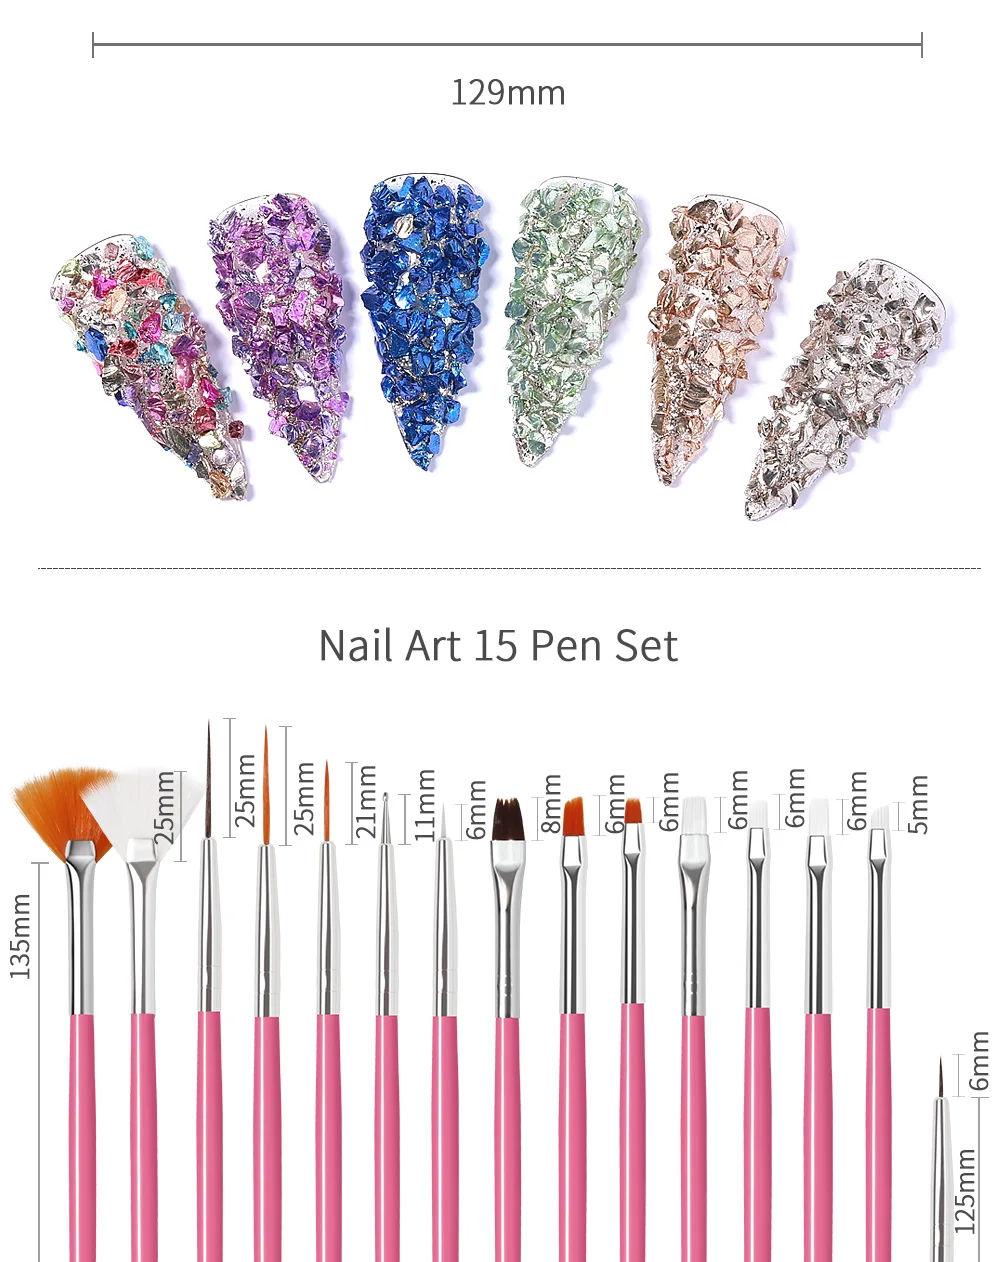 S5f11e72359014944823d32904fa8aebdU Manicure Set for Nail Sequin Kit Nail Care Accessories Set Nail Art Pen Brush Nails Accessories Manicure Tools